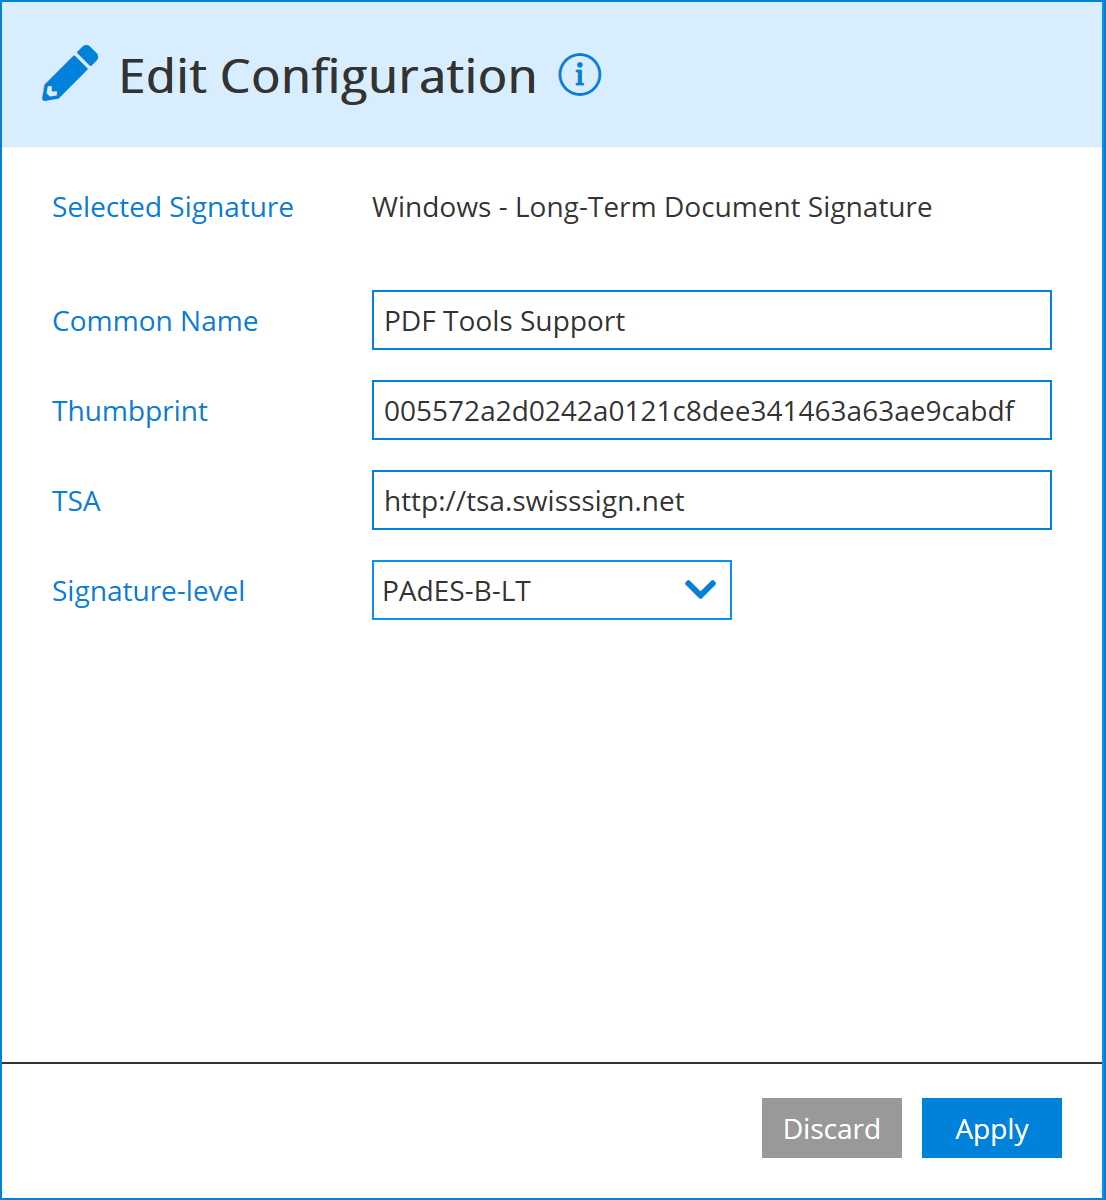 Windows signature configuration of PADES-B-LT/LTA